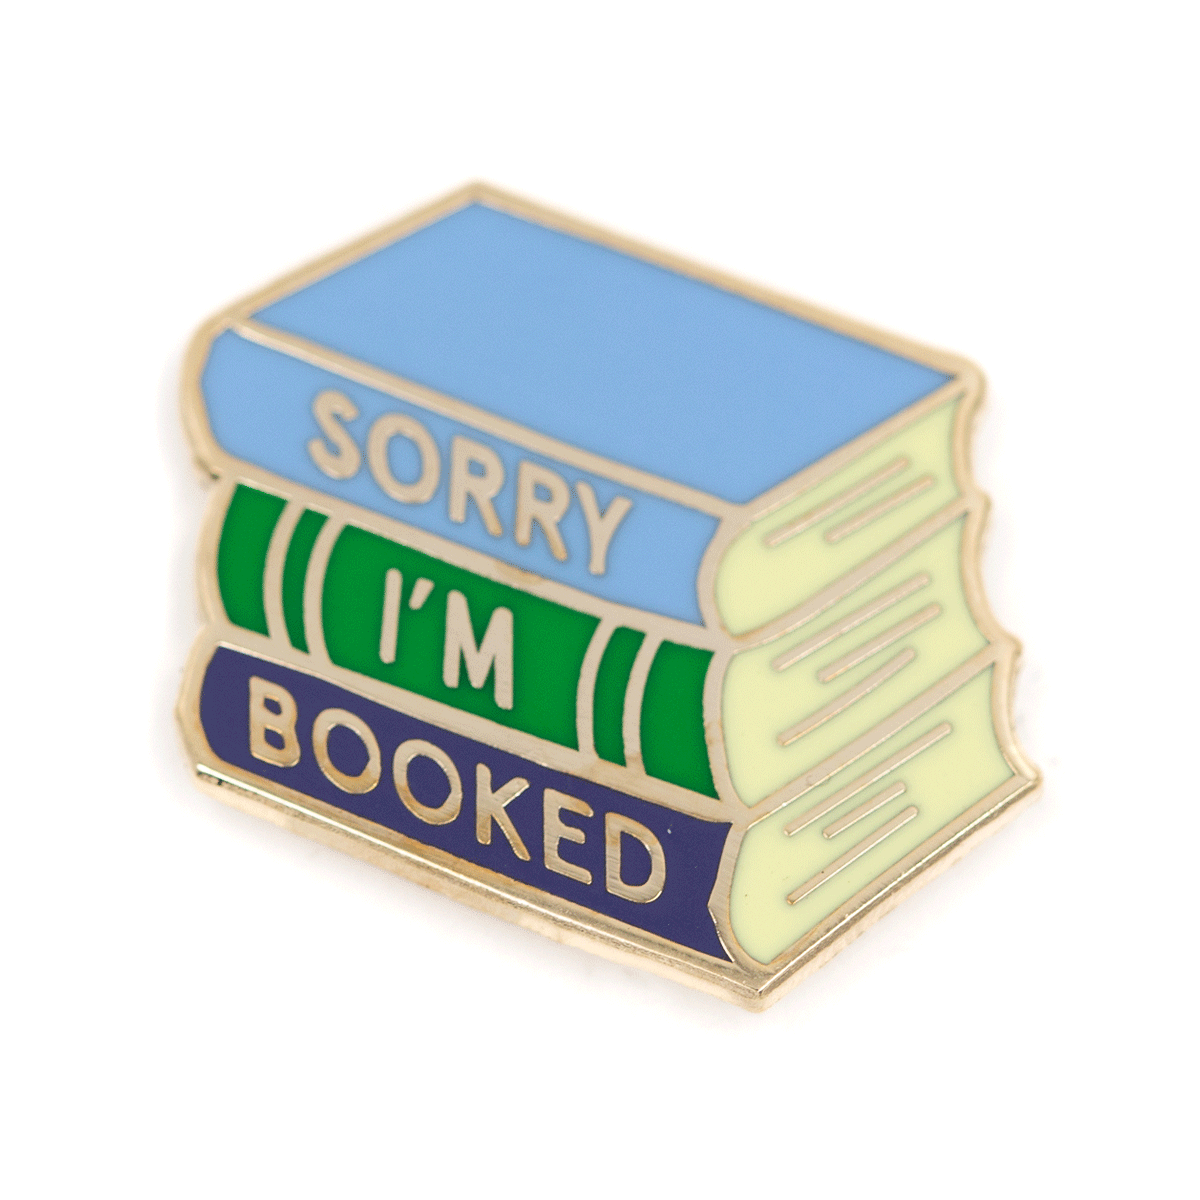 "Sorry I'm Booked" Enamel Pin